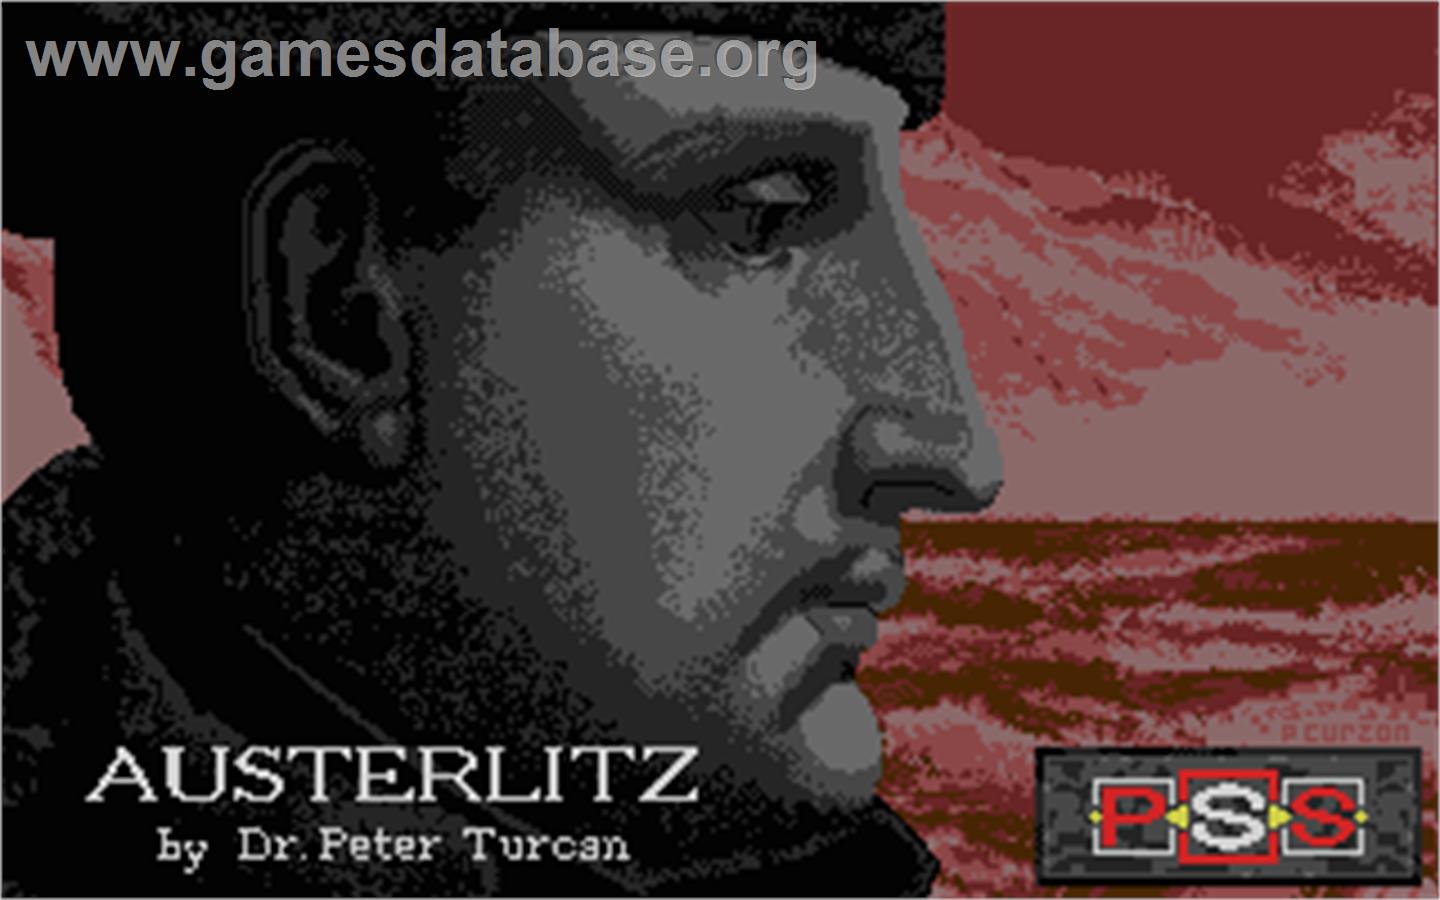 Austerlitz - Atari ST - Artwork - Title Screen